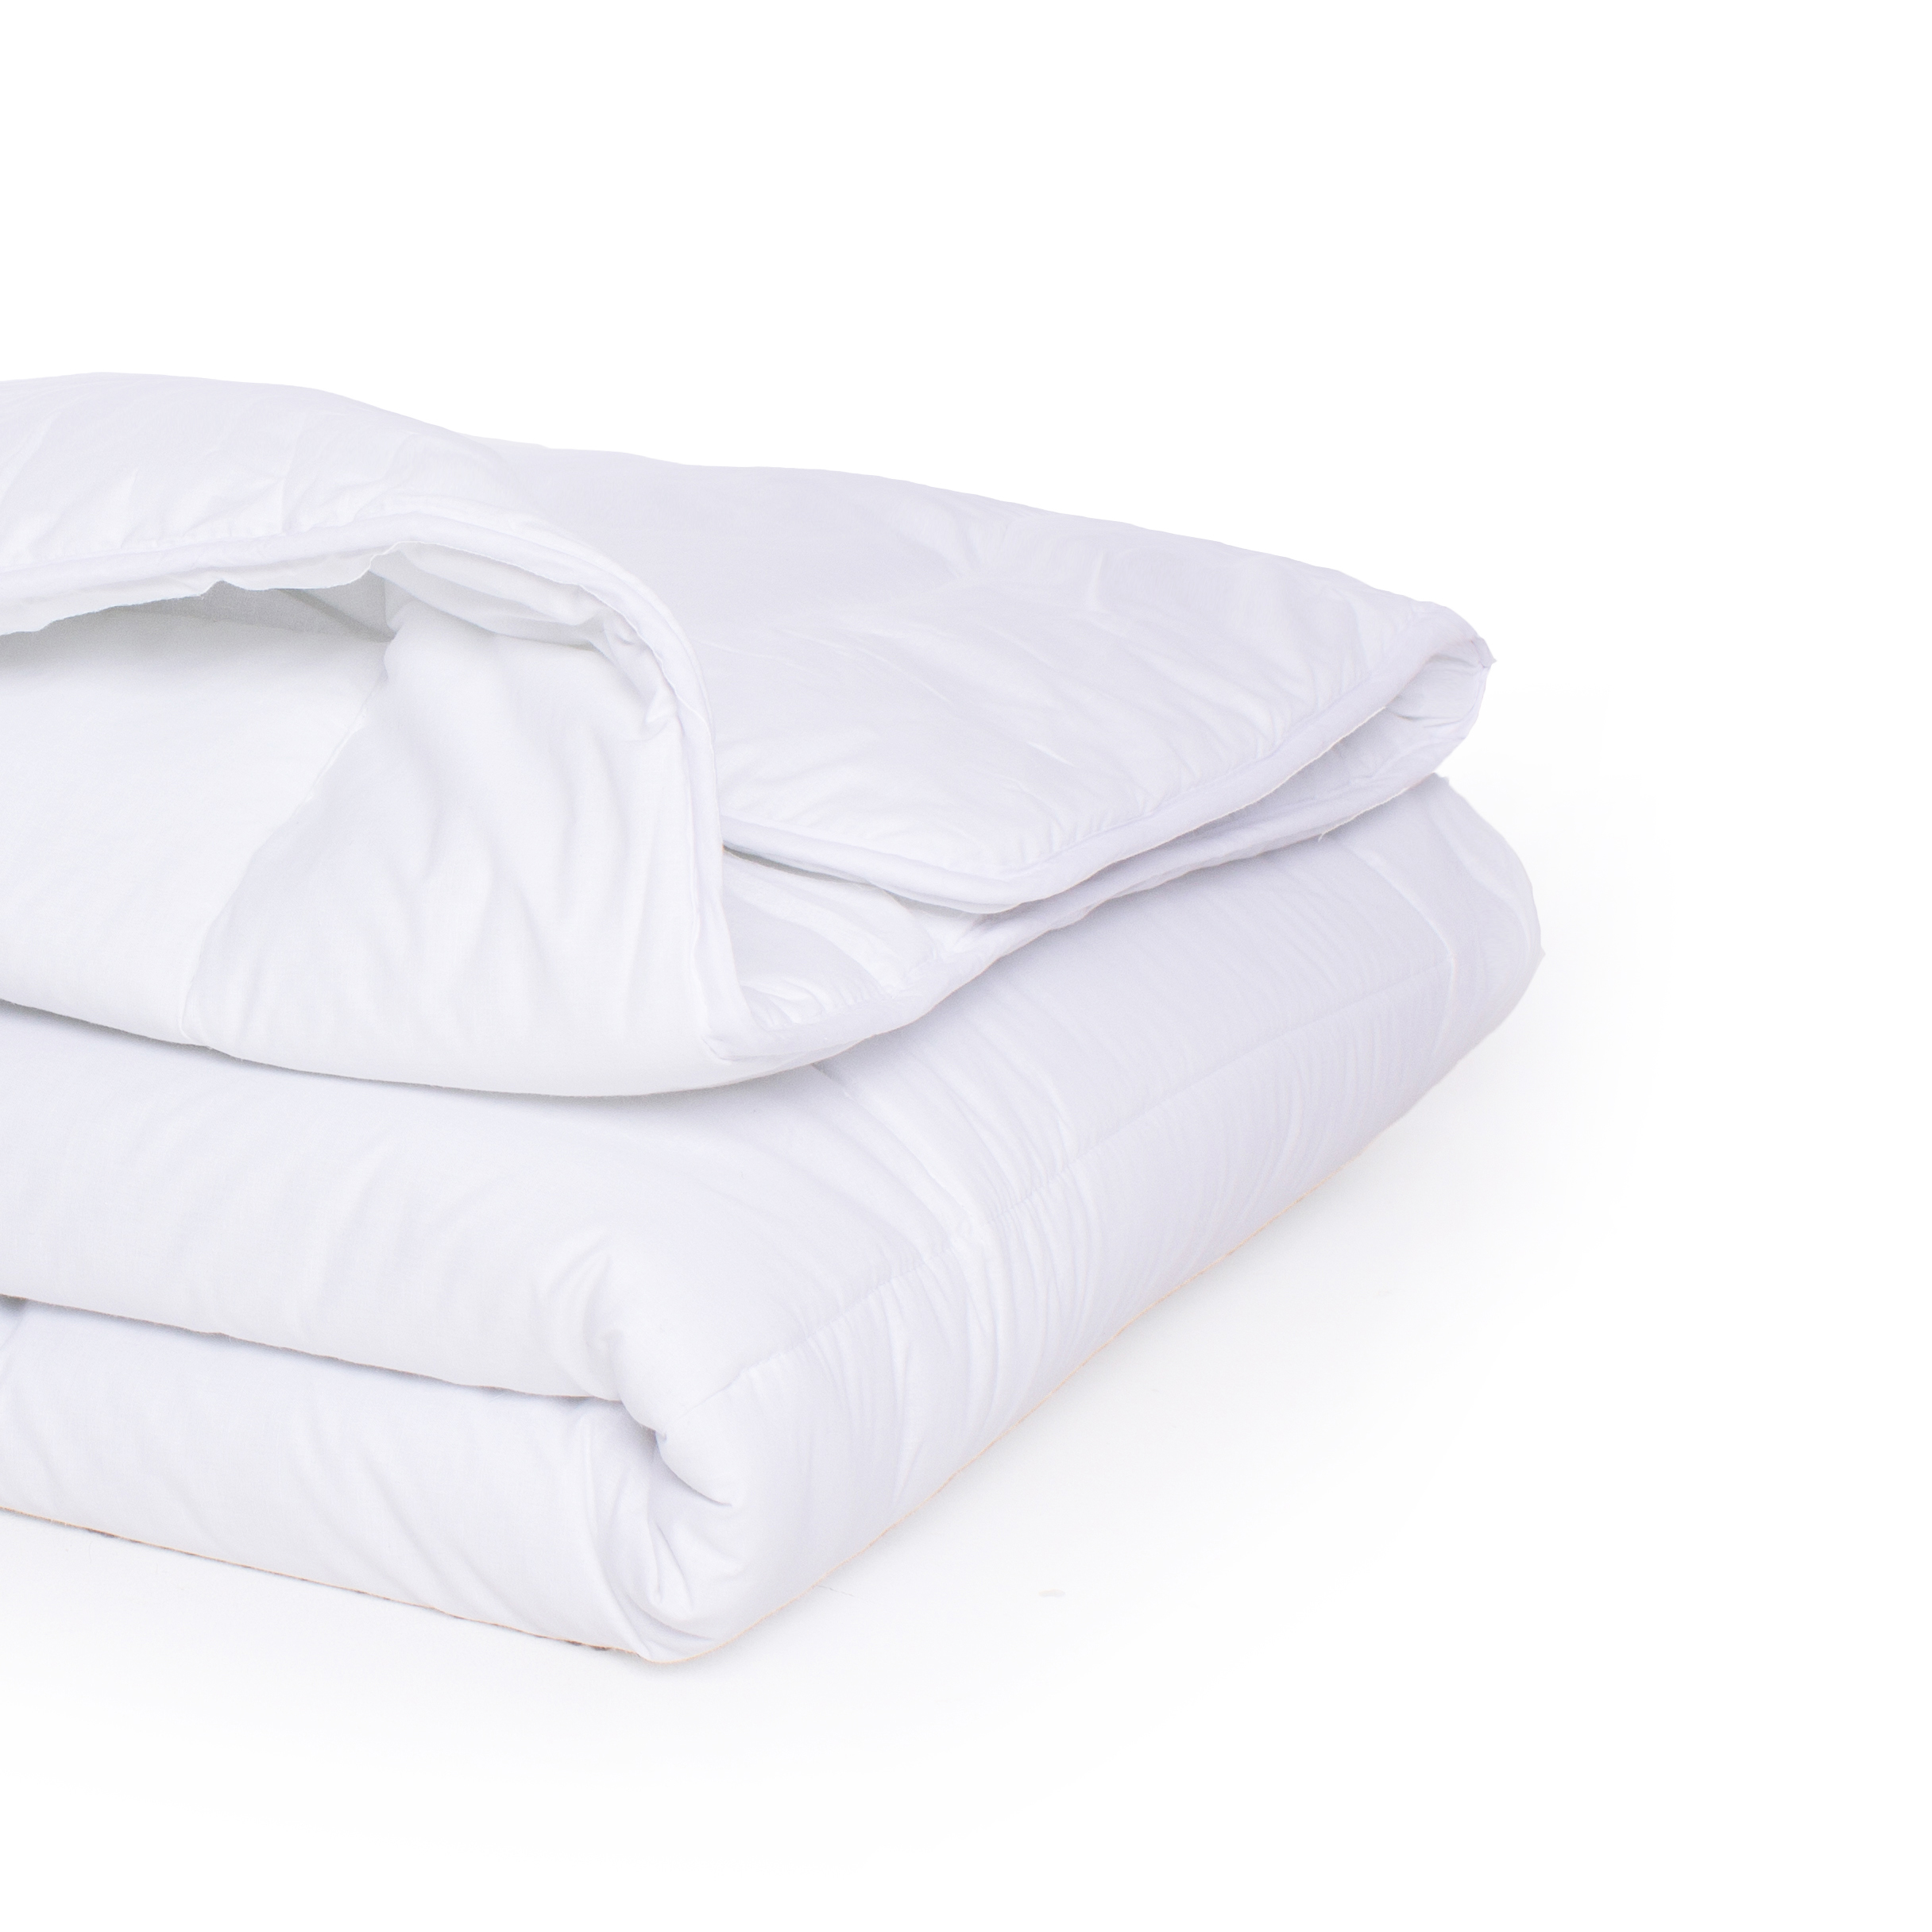 Одеяло шерстяное MirSon Bianco Экстра Премиум №0787, зимнее, 220x240 см, белое - фото 4